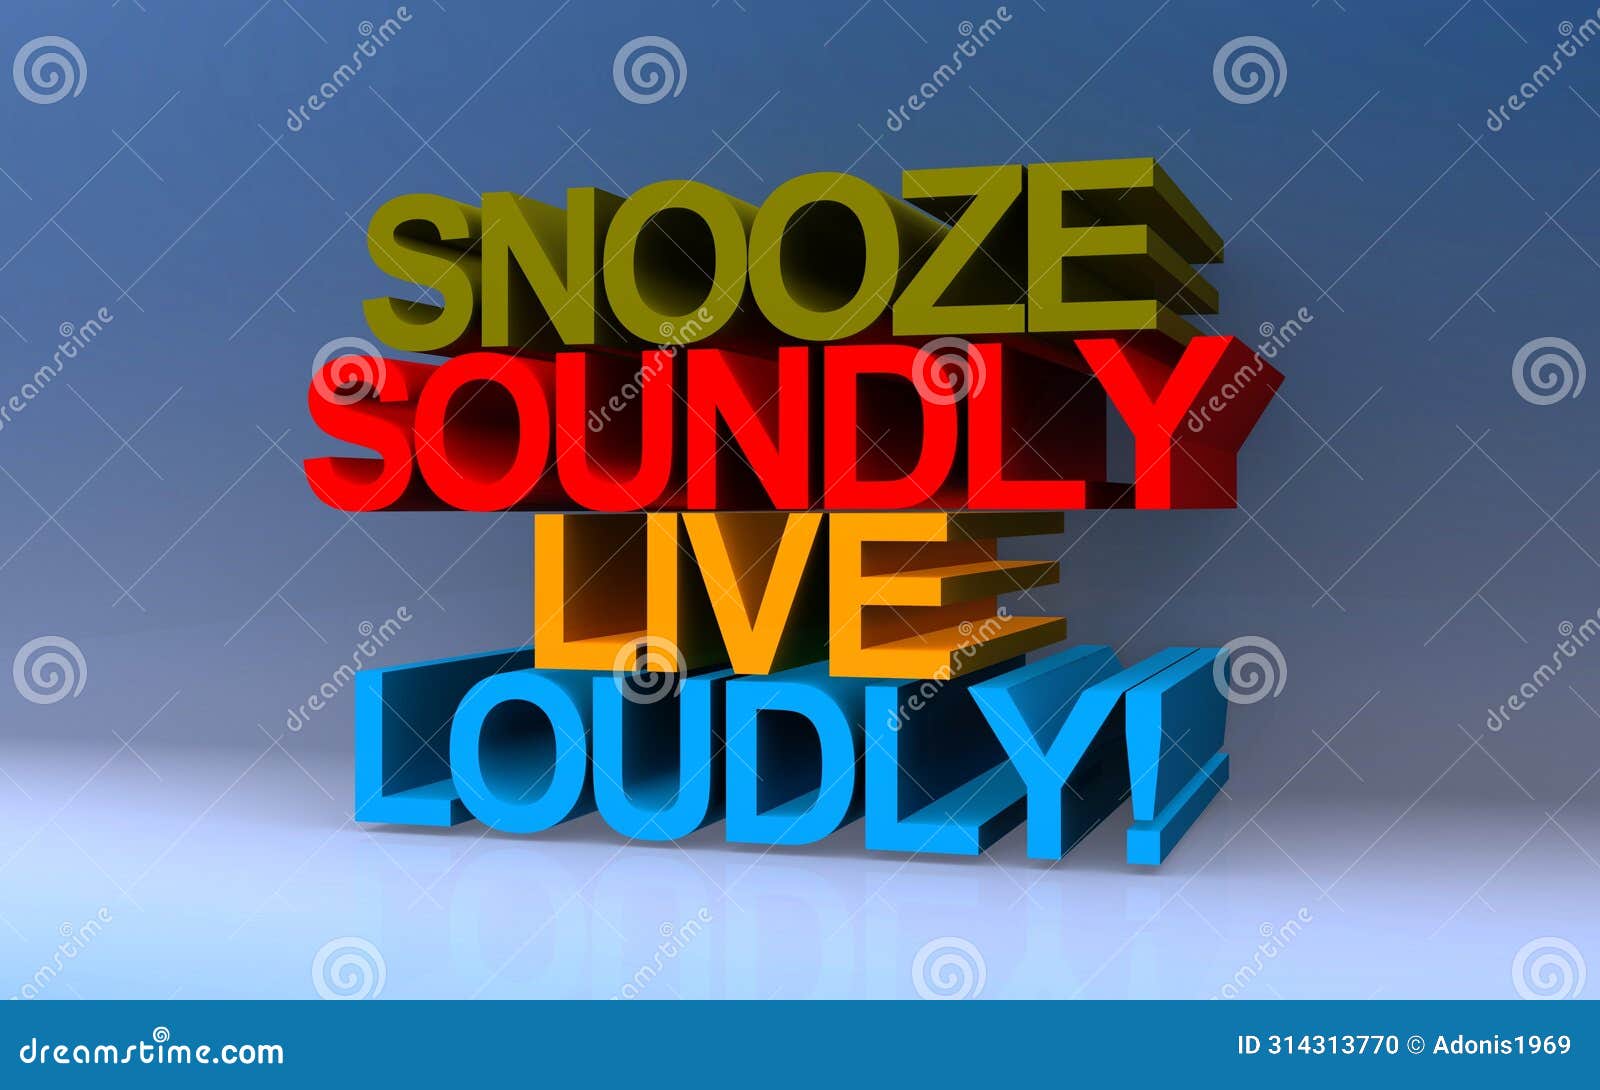 snooze soundly live loudly on blue